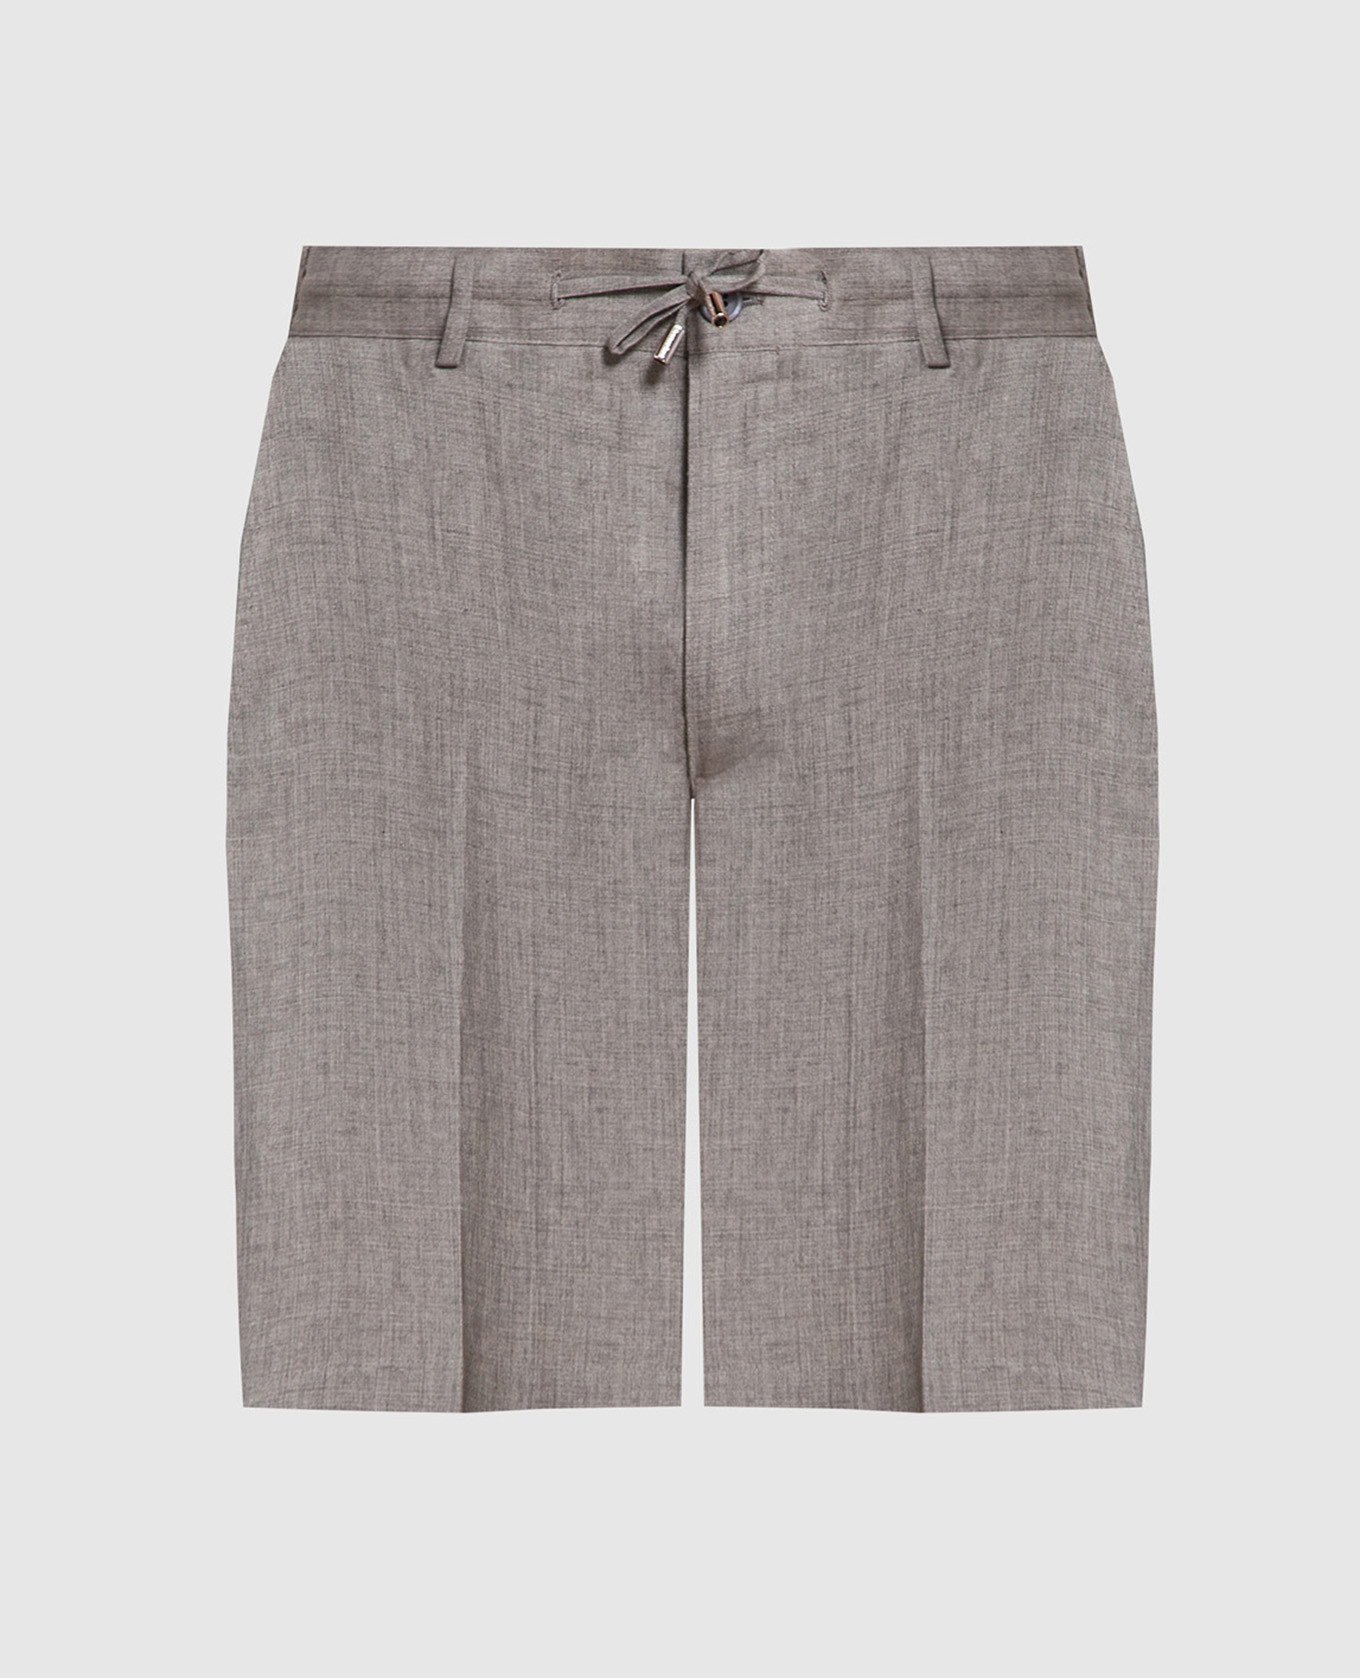 Gray linen shorts